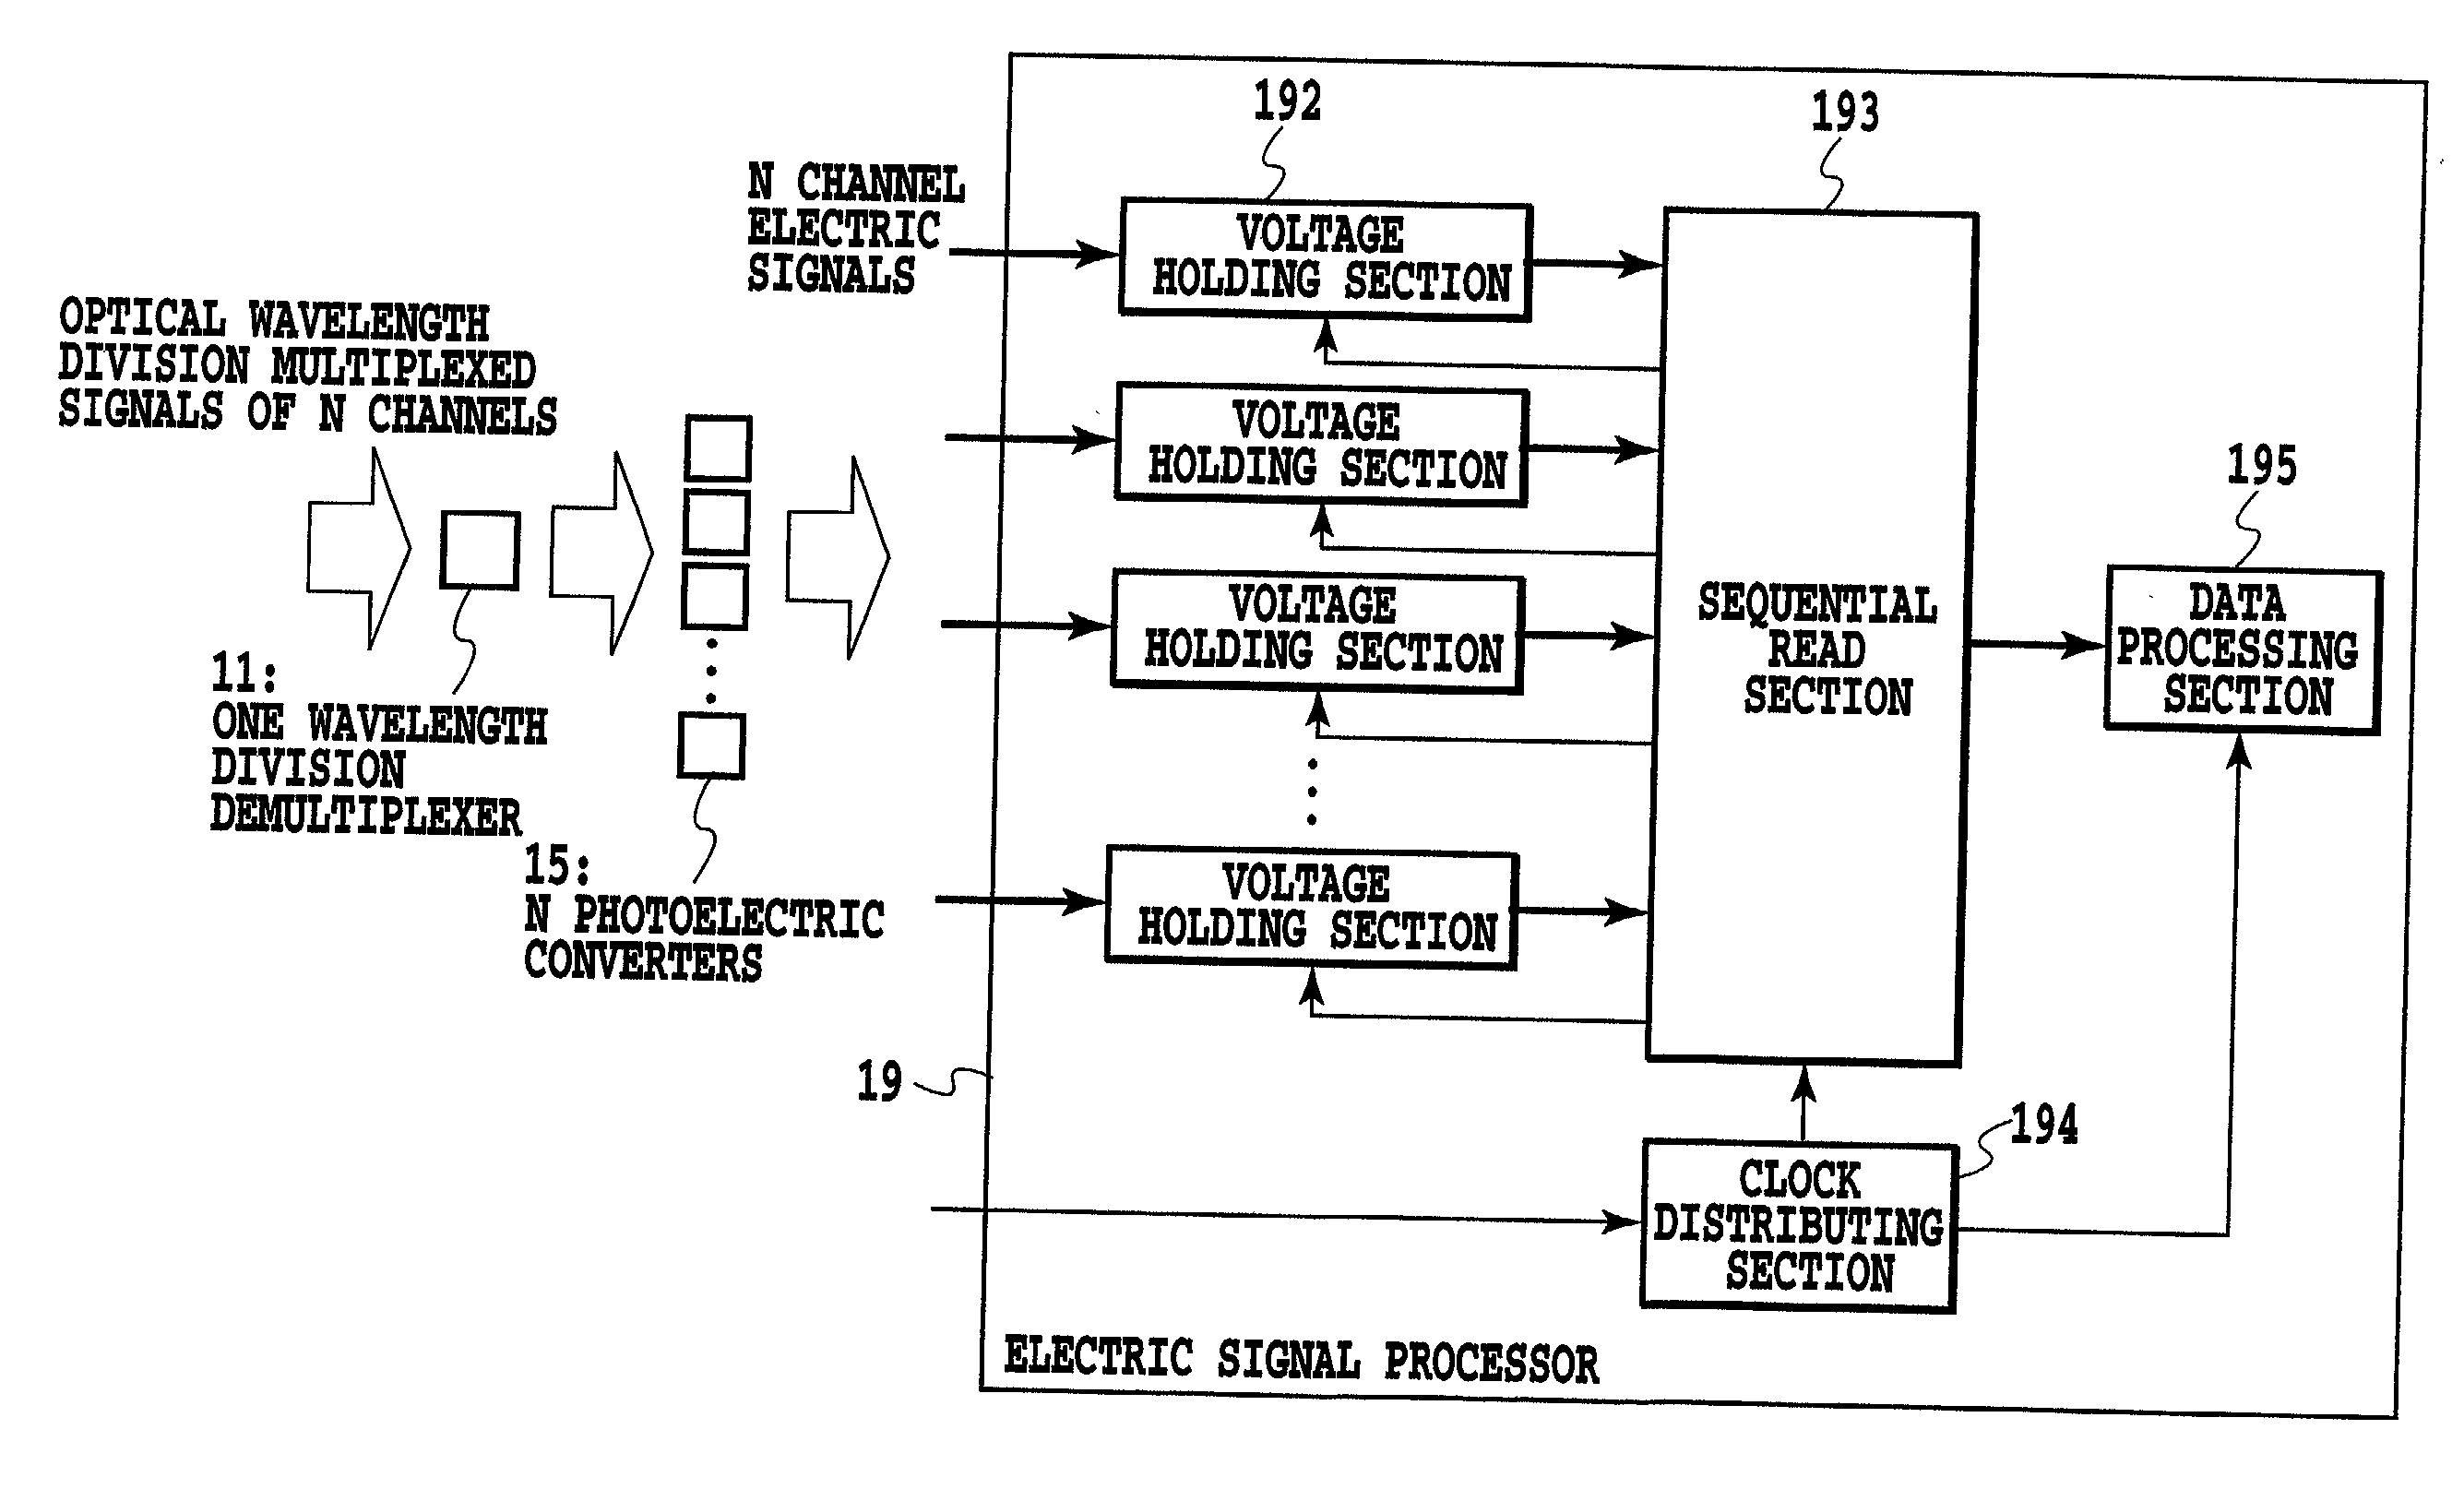 Optical wavelength division multiplex signal monitoring apparatus